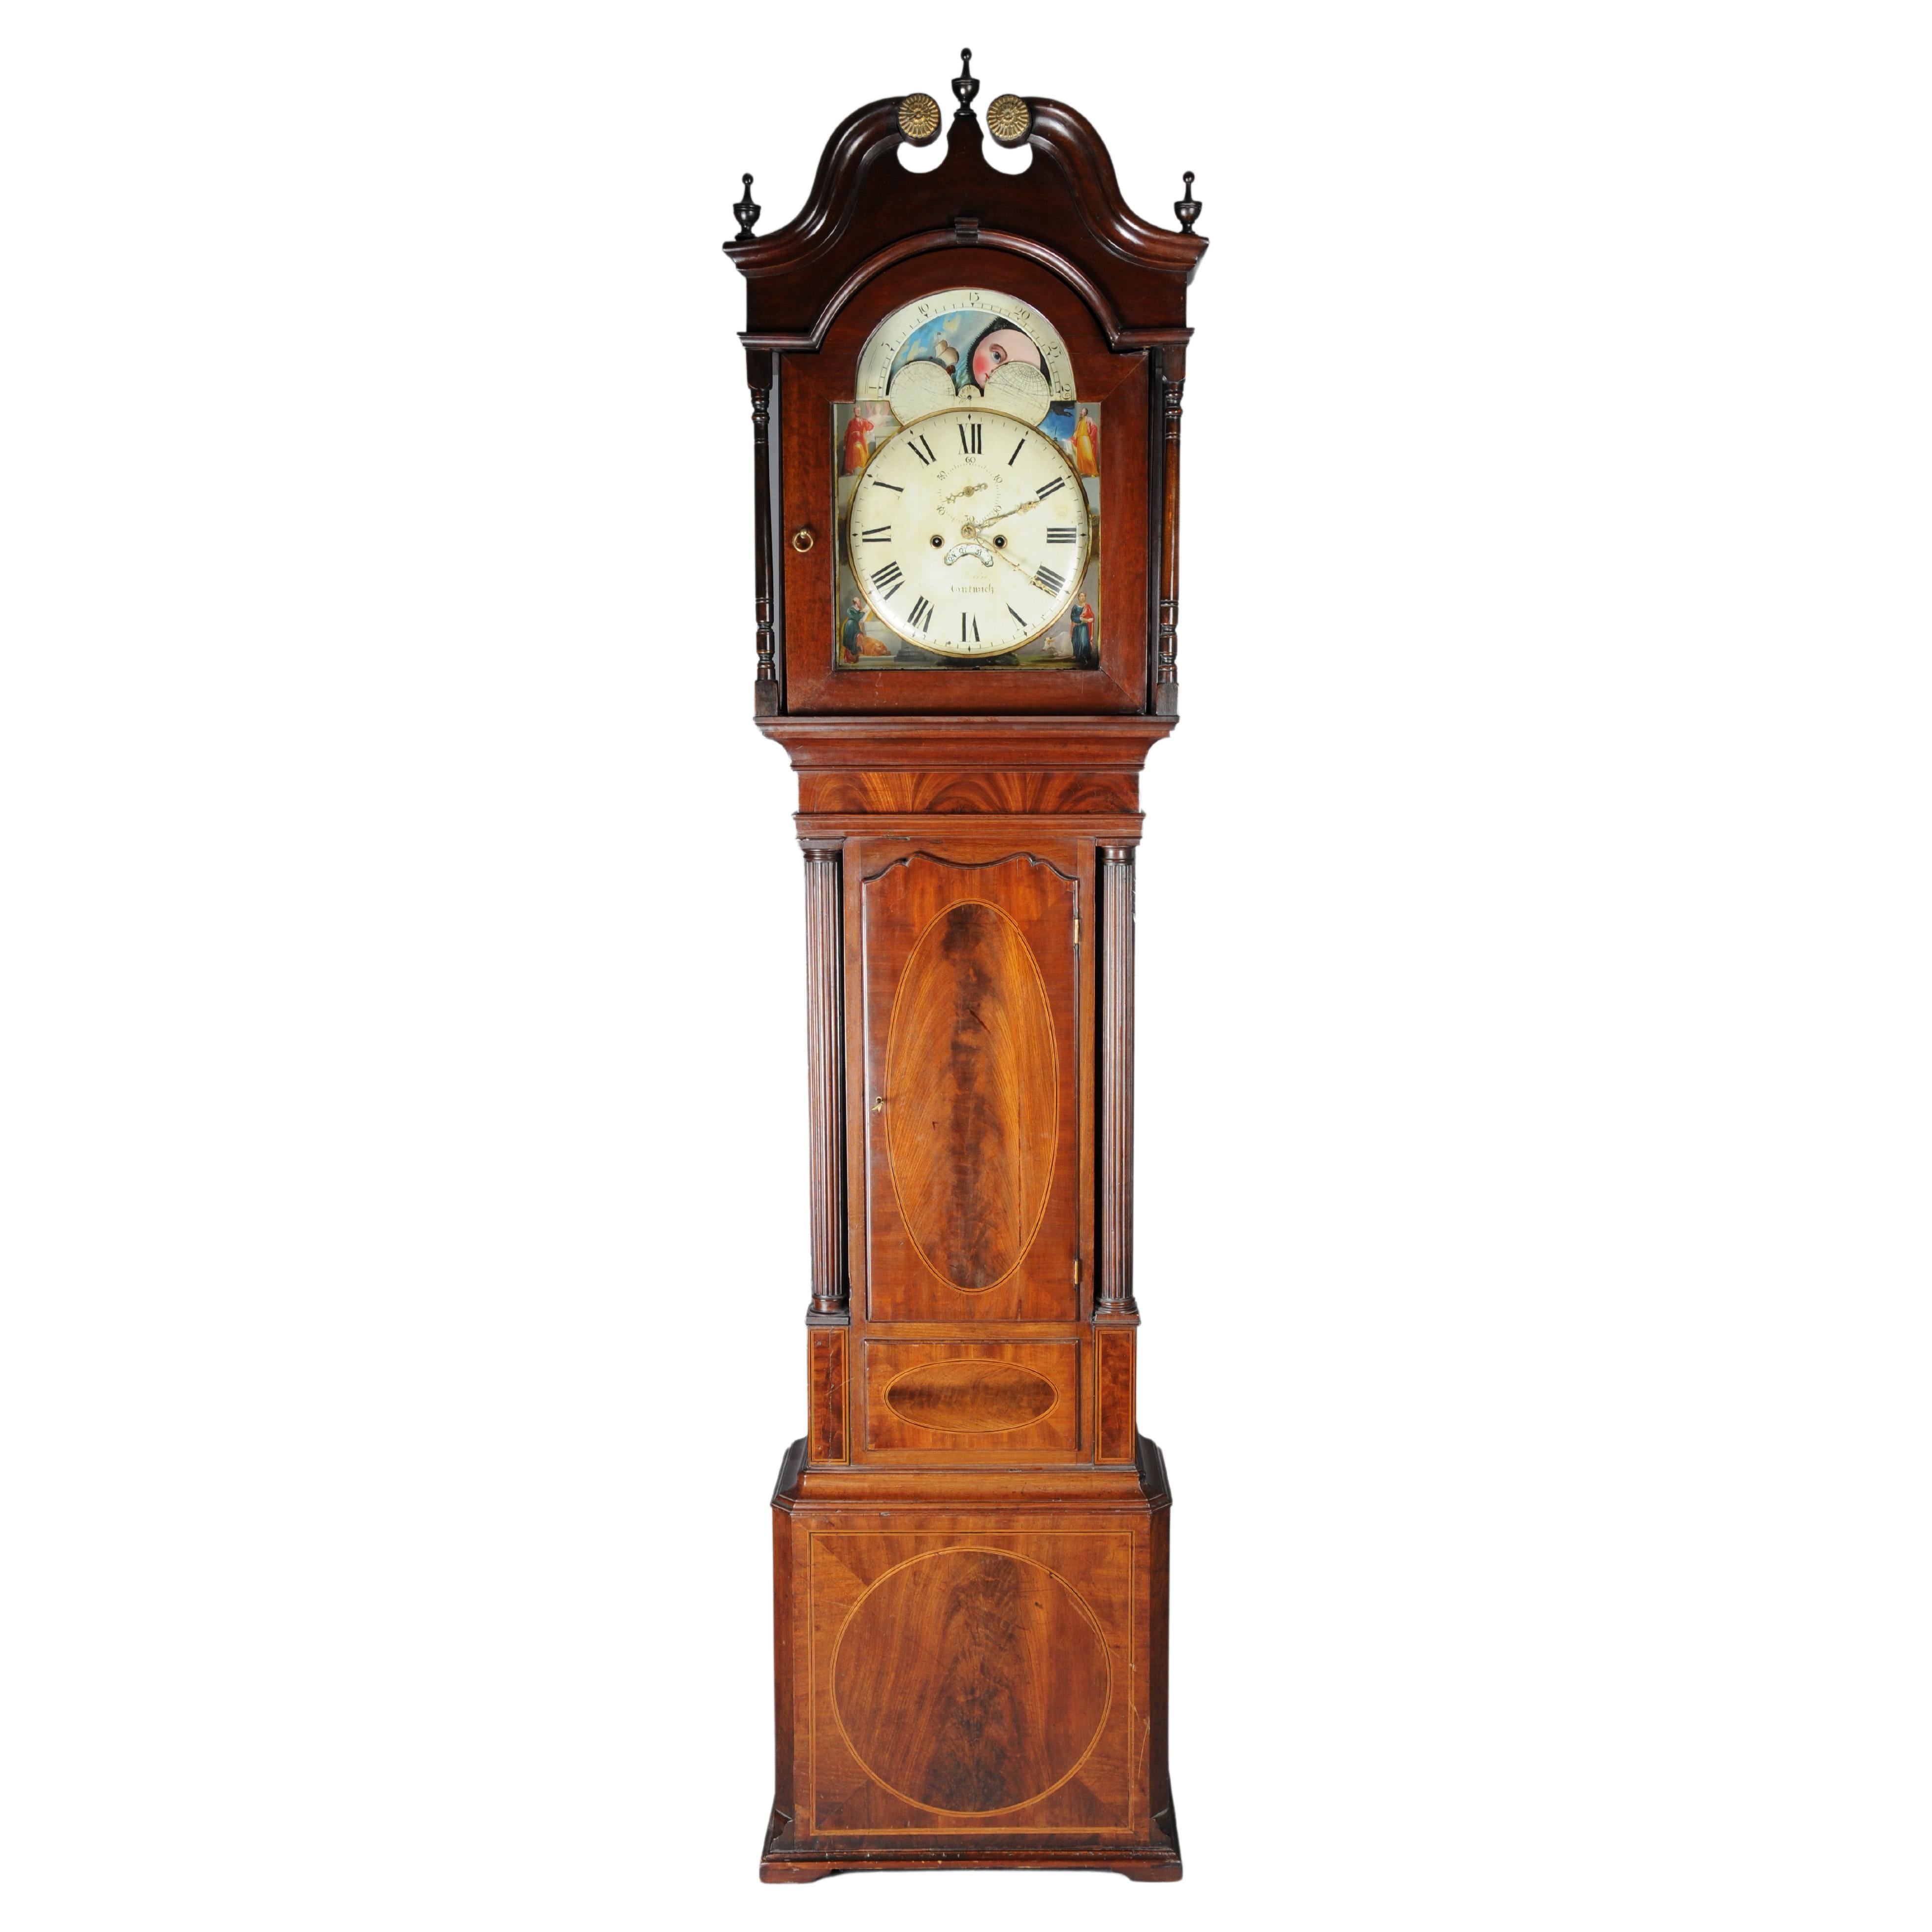 Masterful antique English grandfather clock, mahogany, 18th century